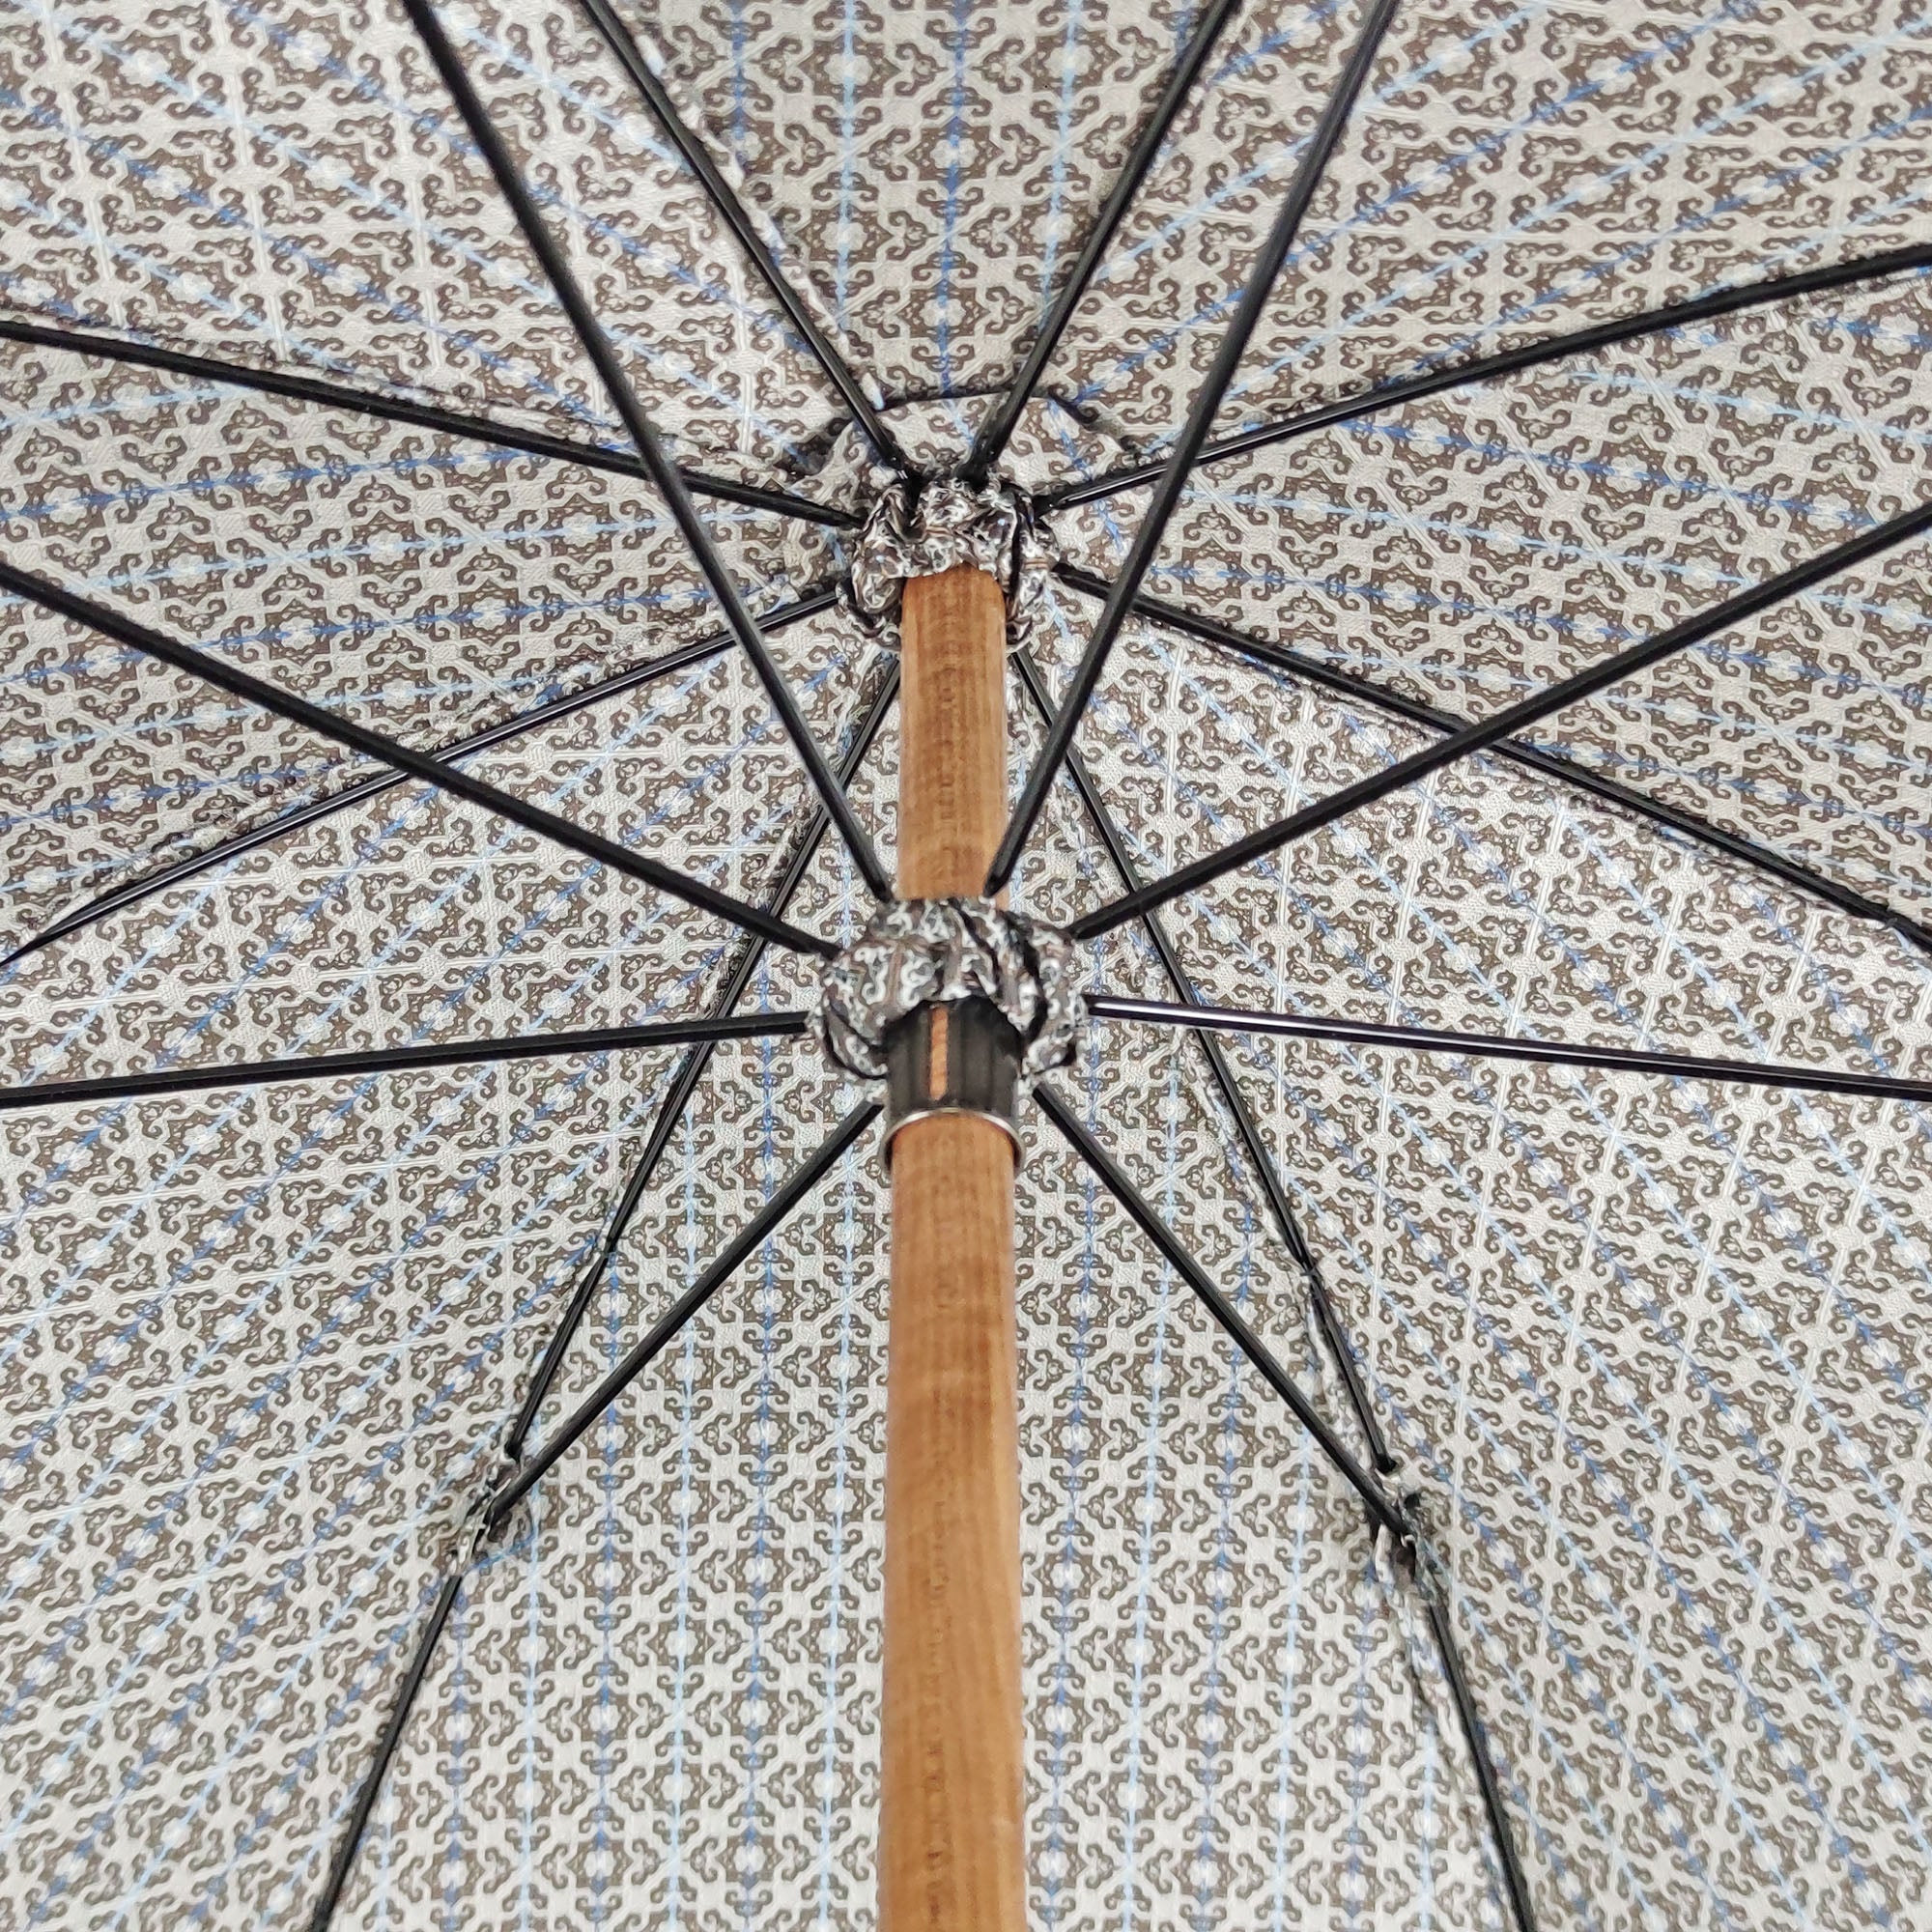 Umbrella with Ram's horn